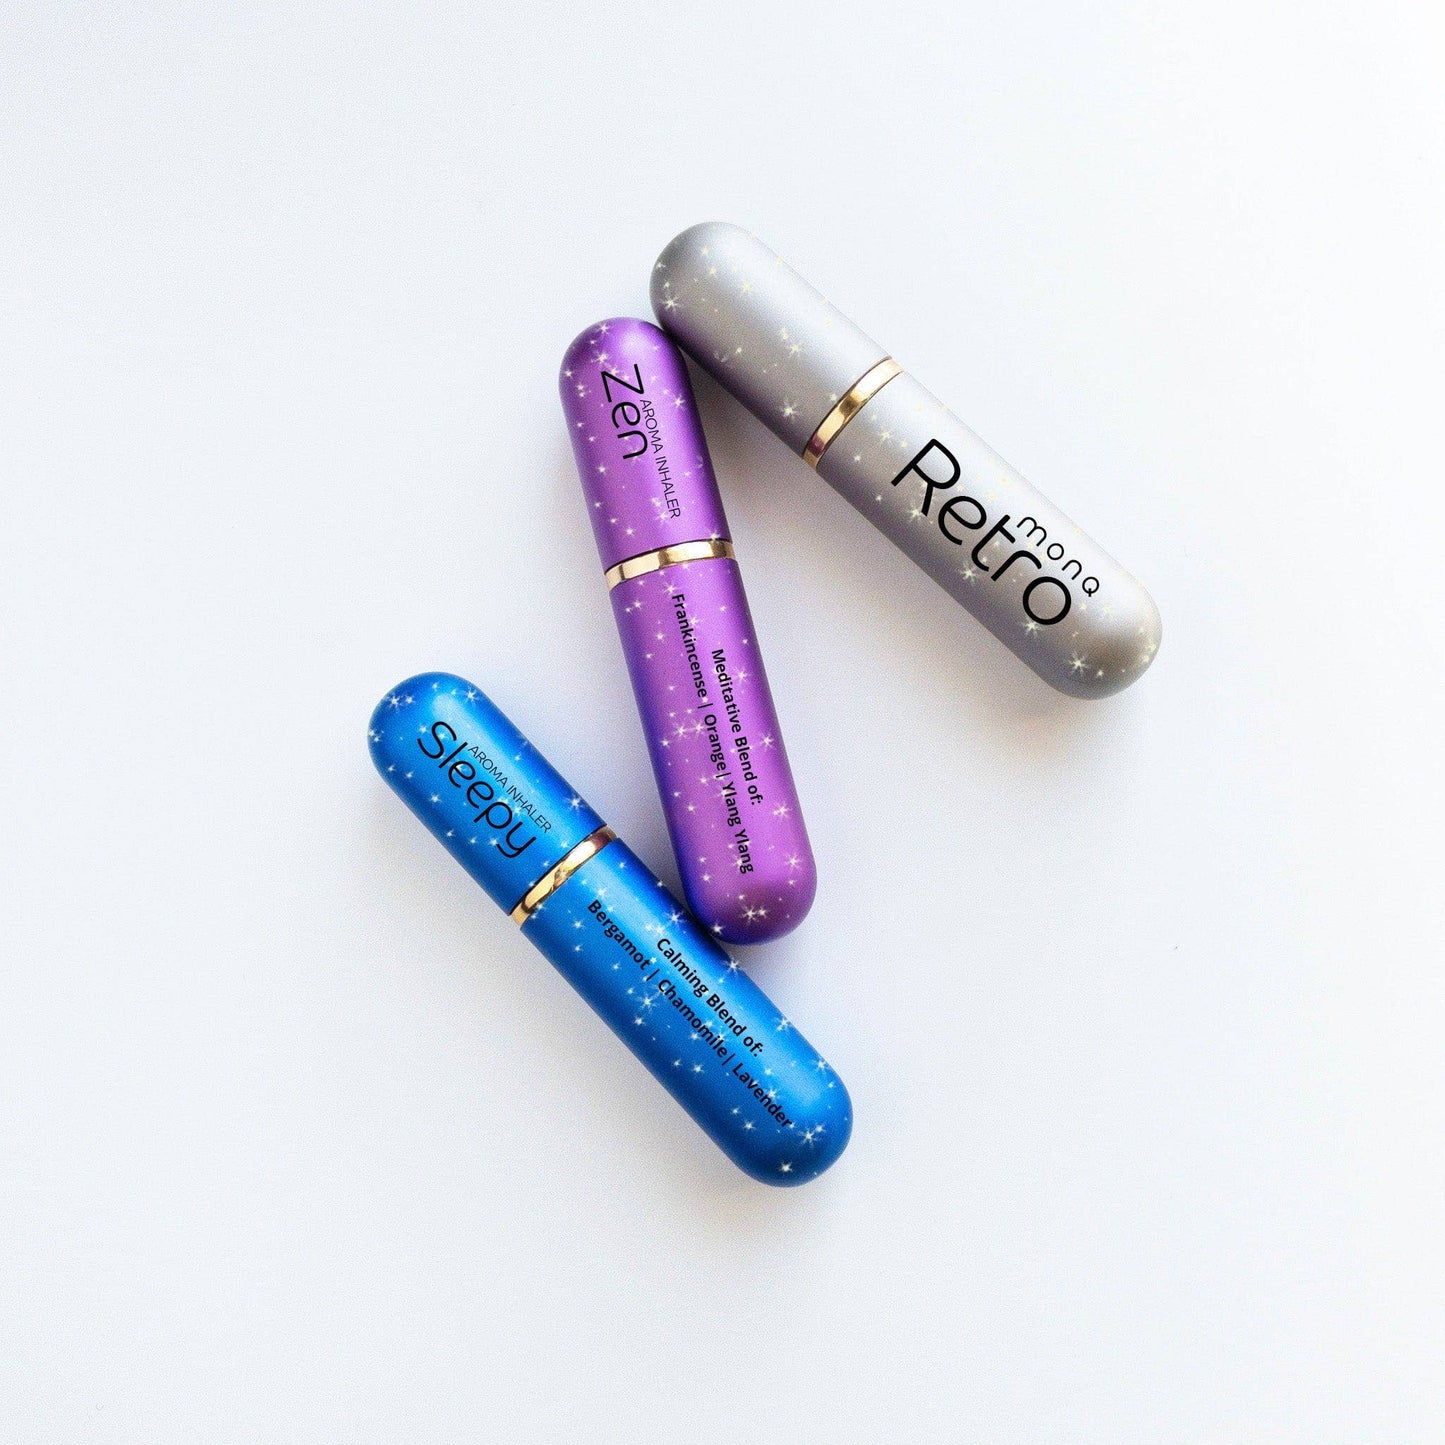 MONQ - Retro Aroma Inhaler set of 3